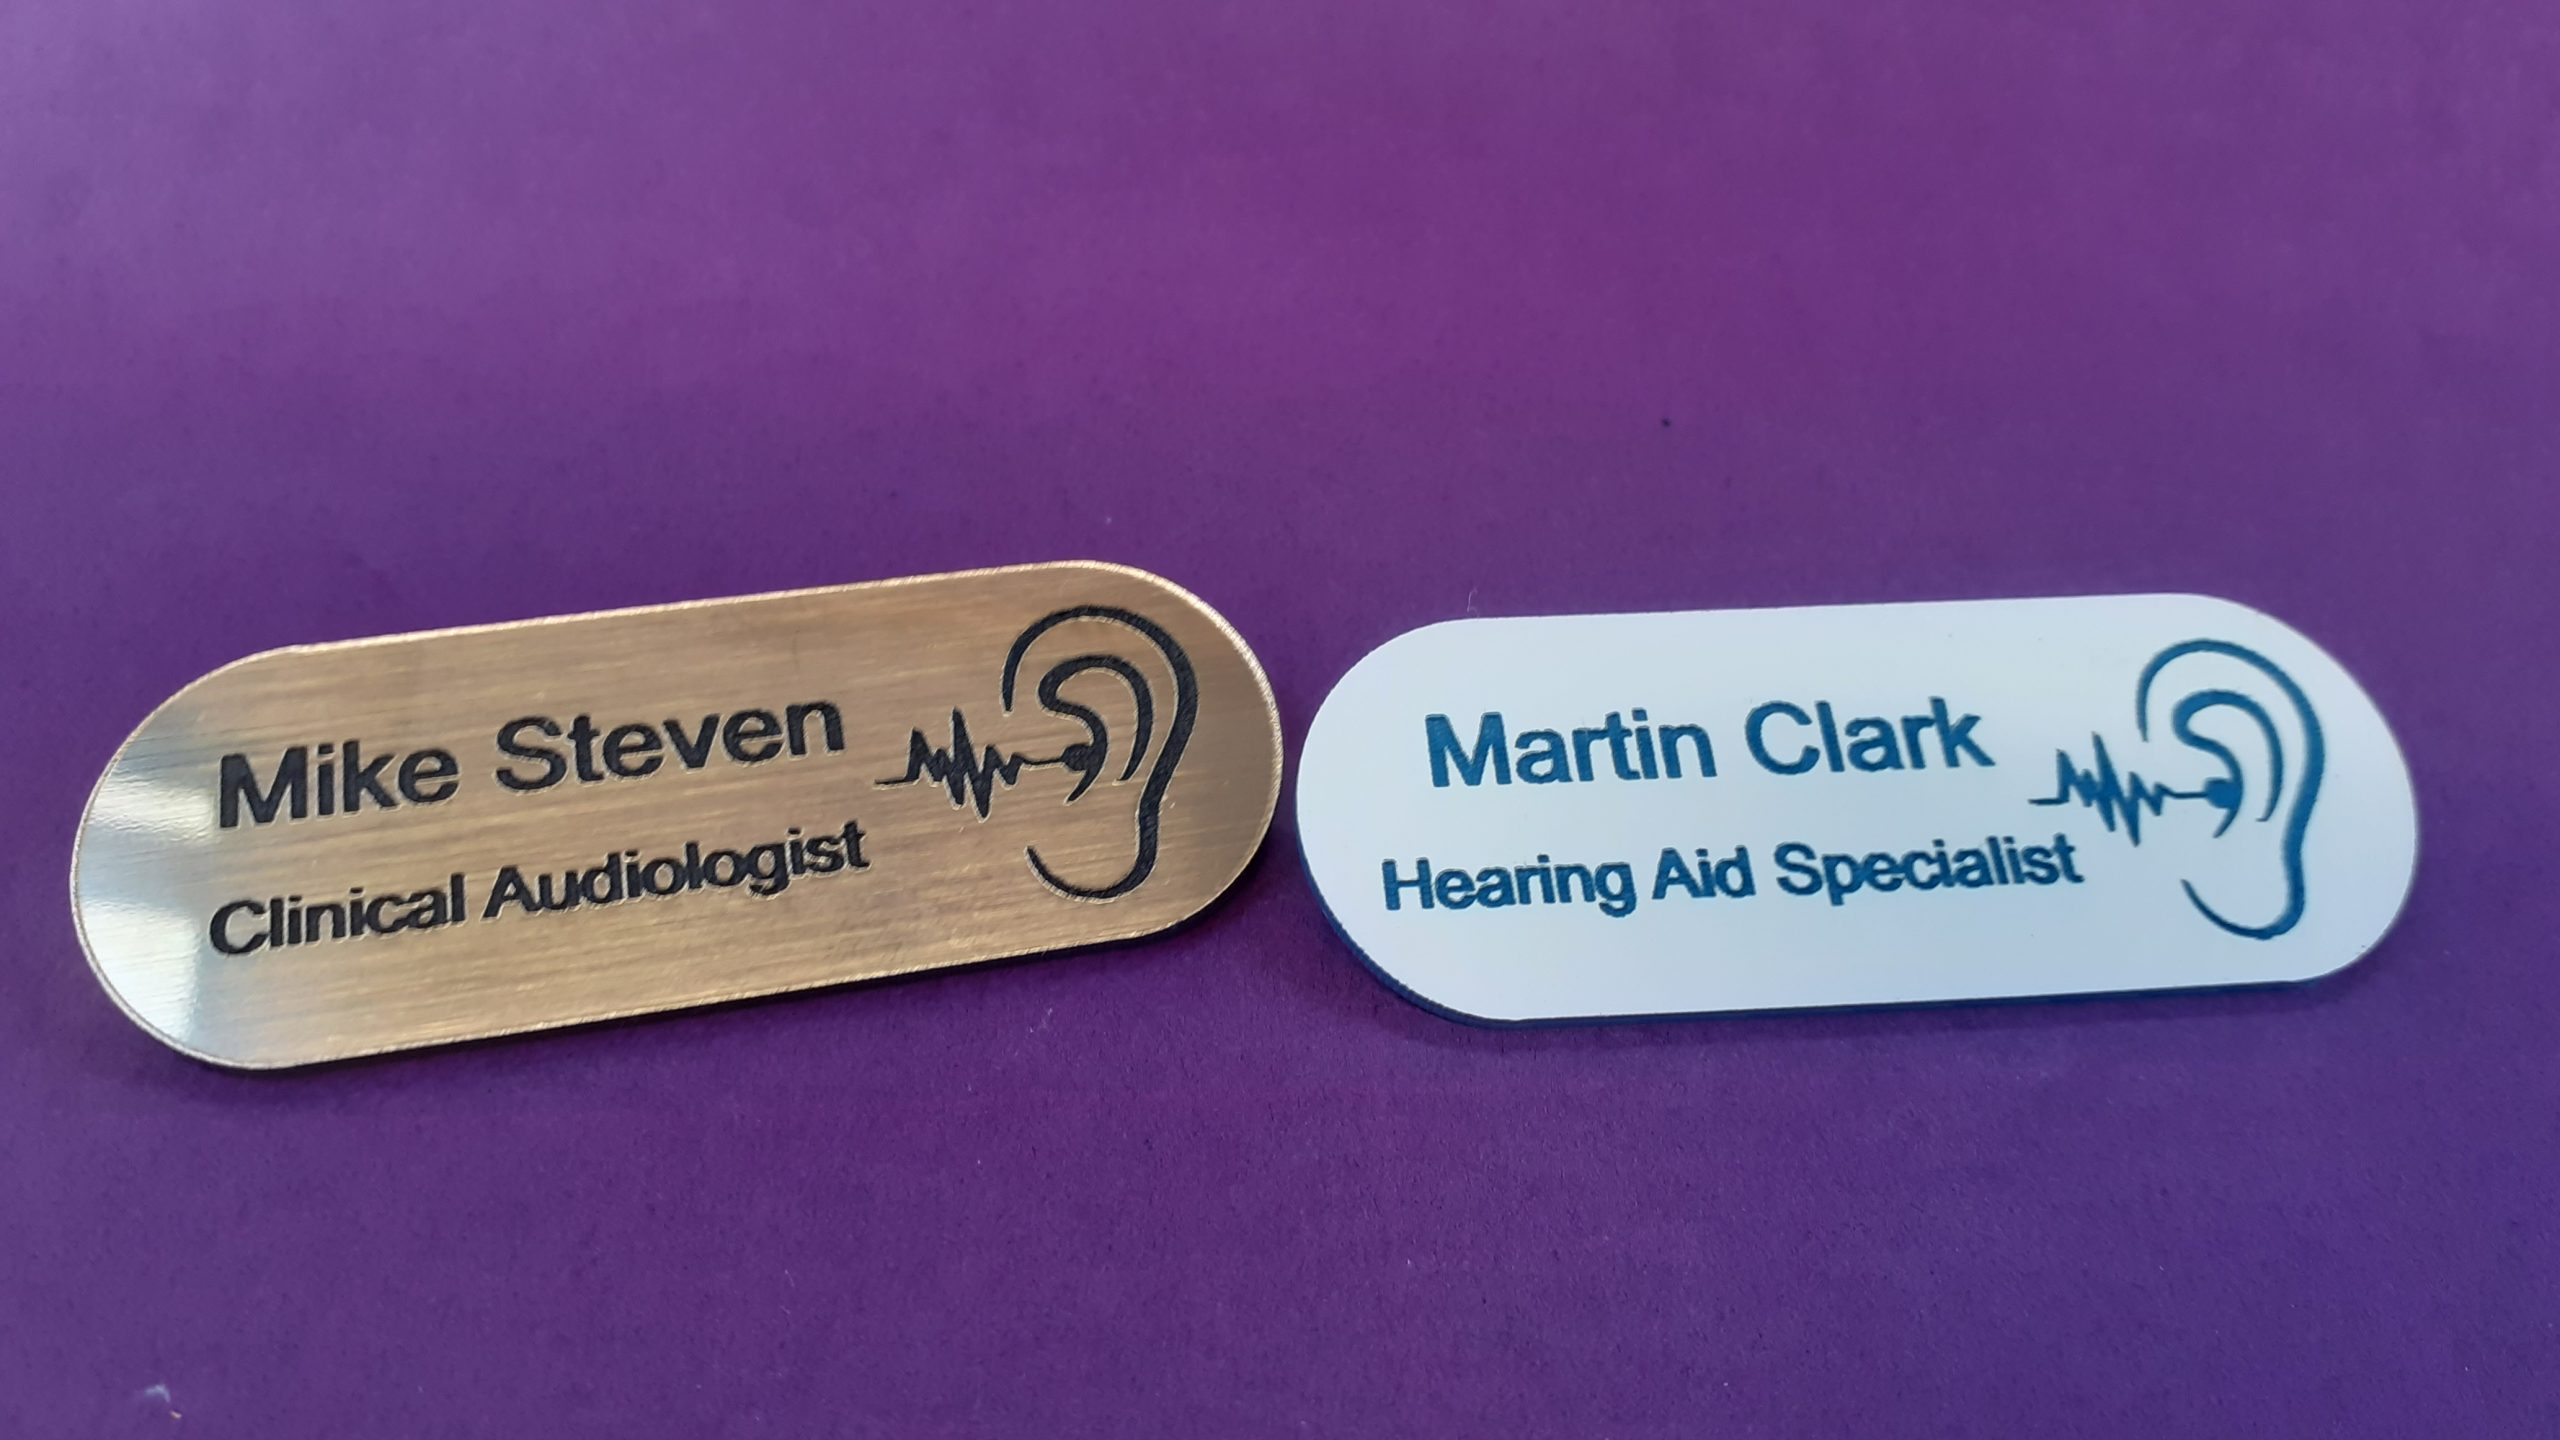 The hearing aid logo